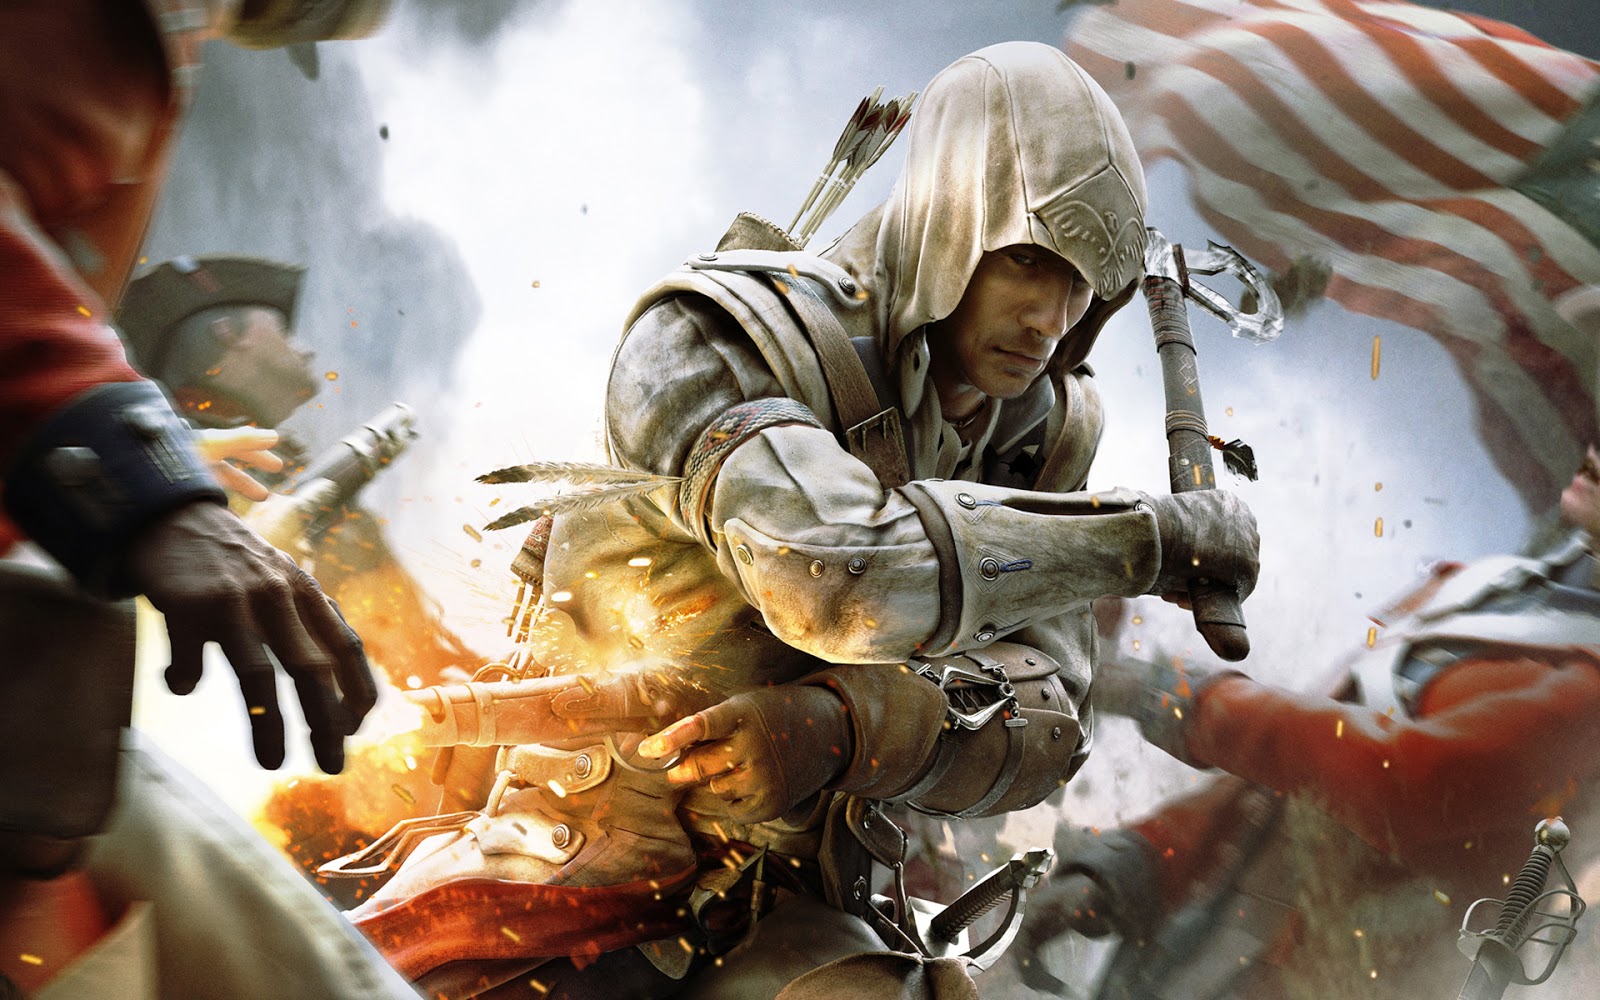 Online Assassins Creed Game Wallpaper